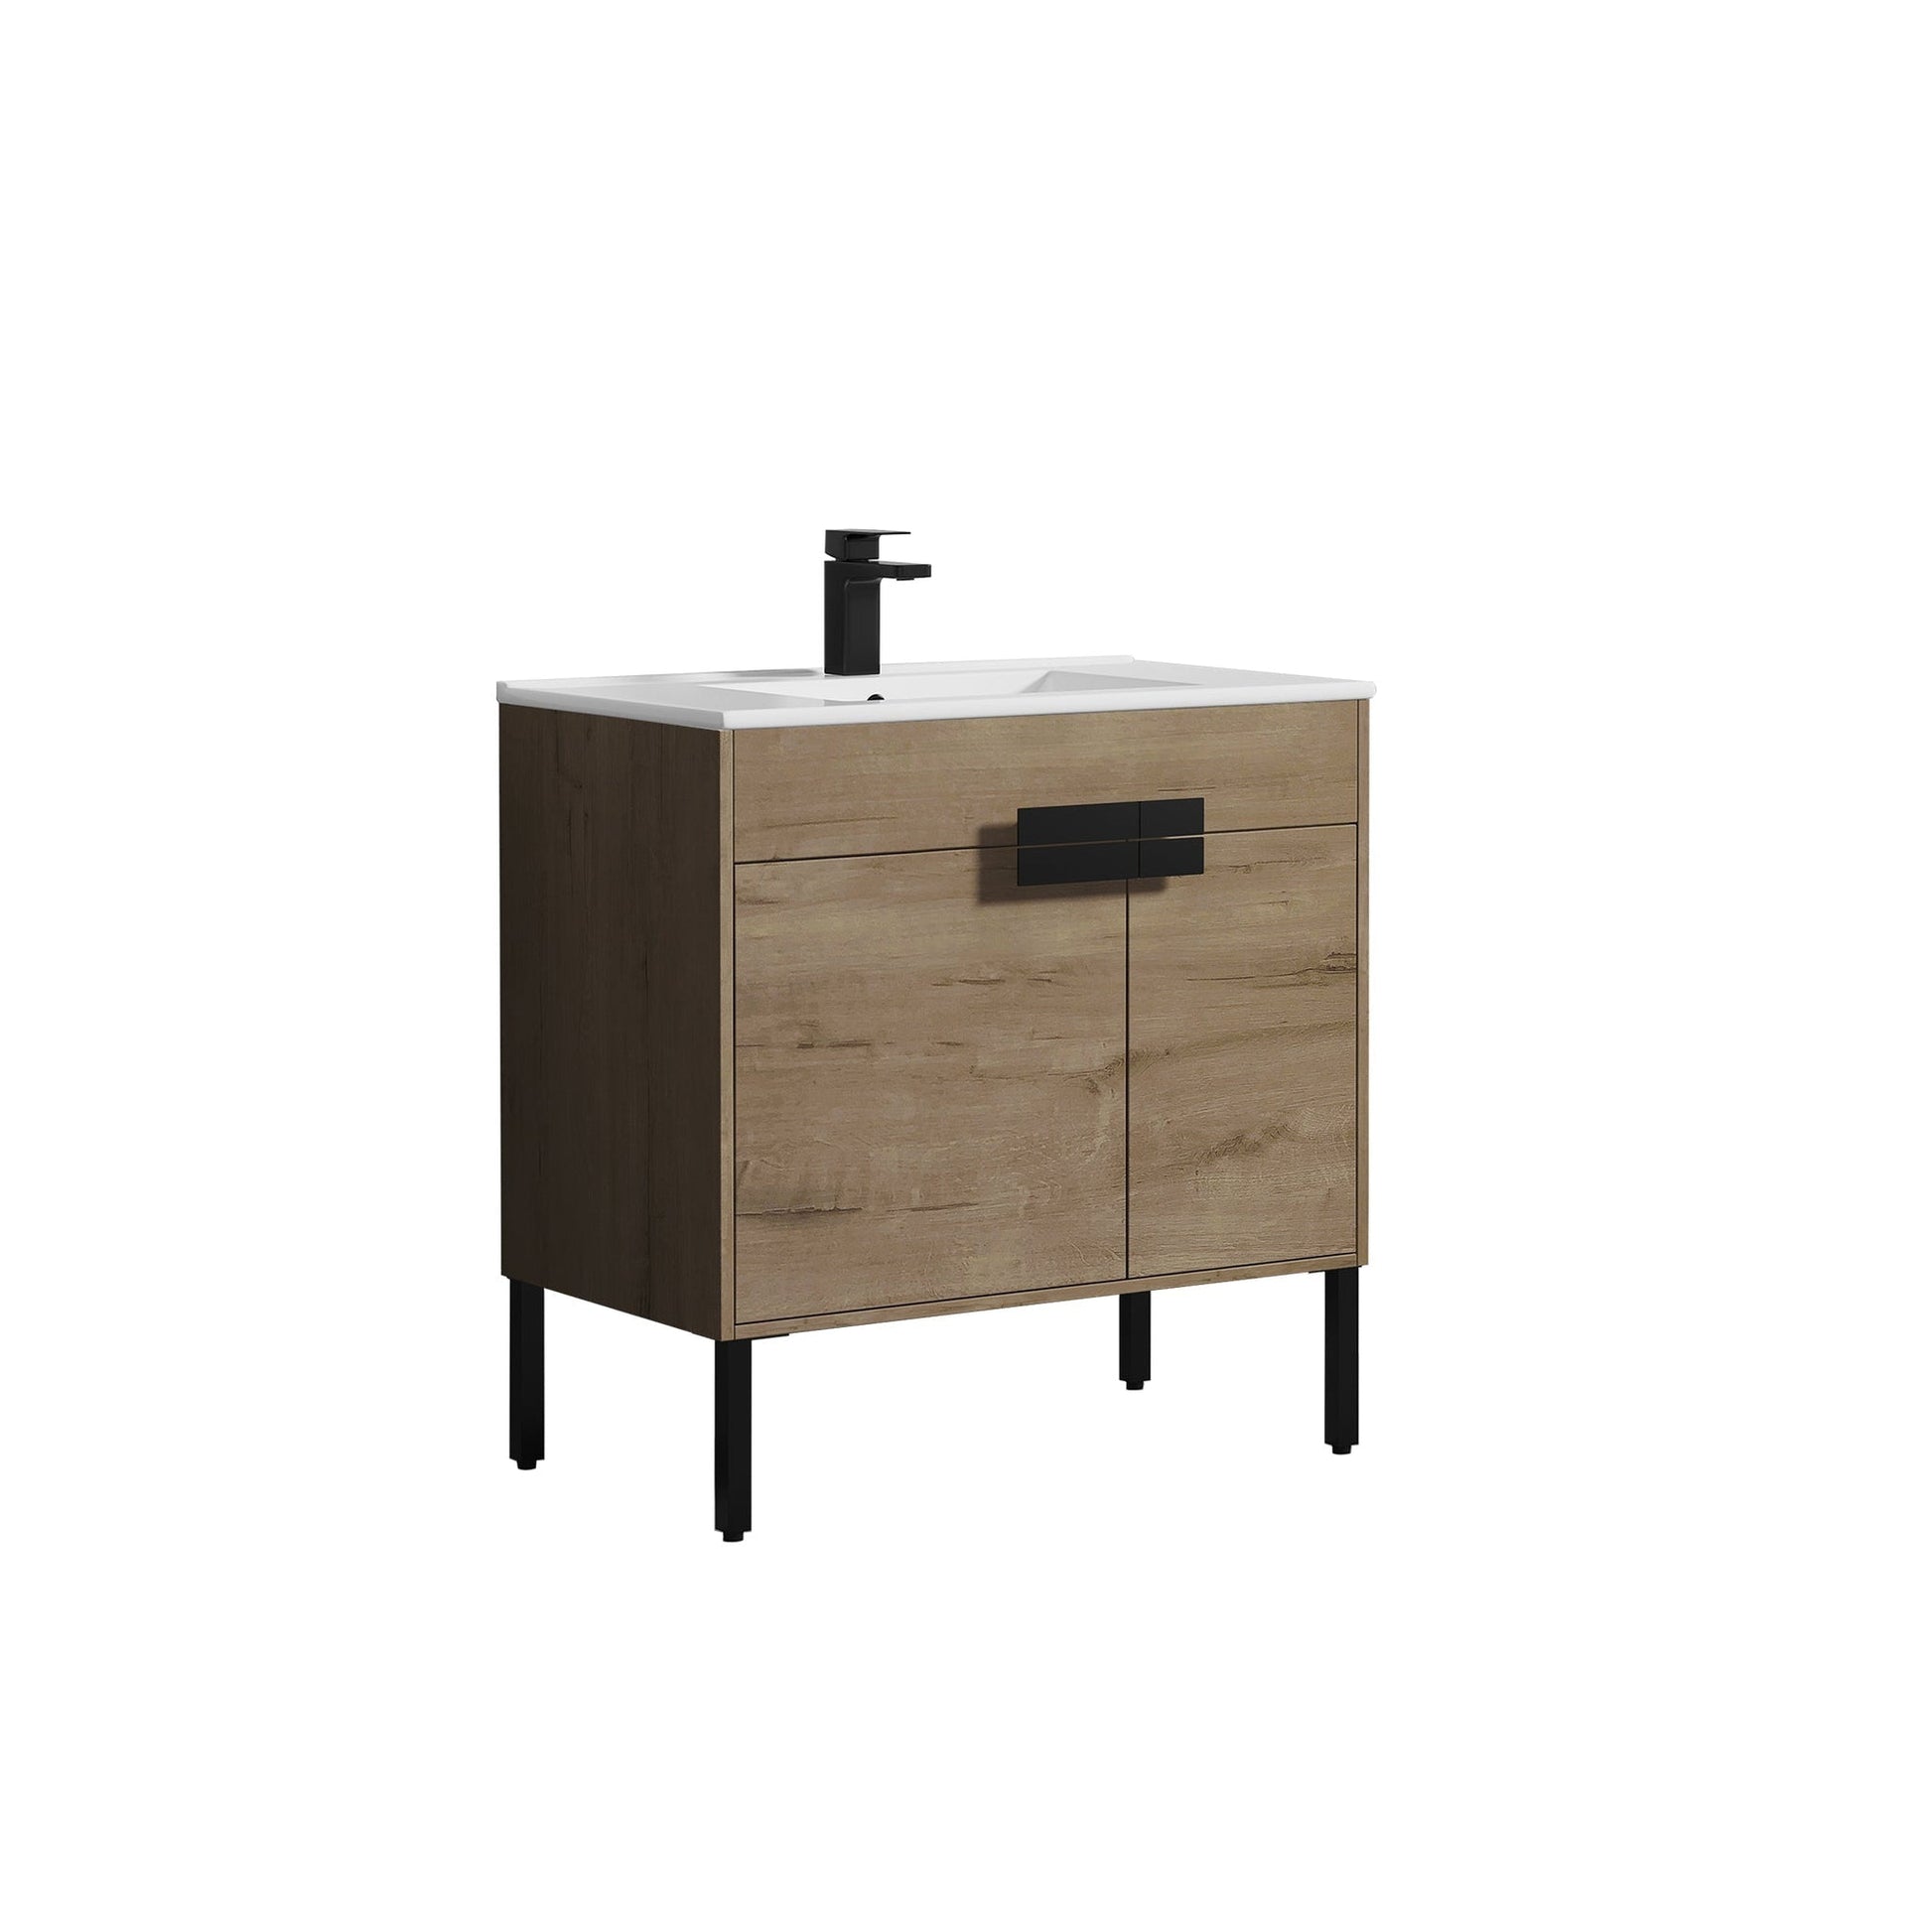 Blossom Bari 36" 2-Door Classic Oak Freestanding Single Vanity Base With Adjustable Shelf, Matte Black Handles & Legs